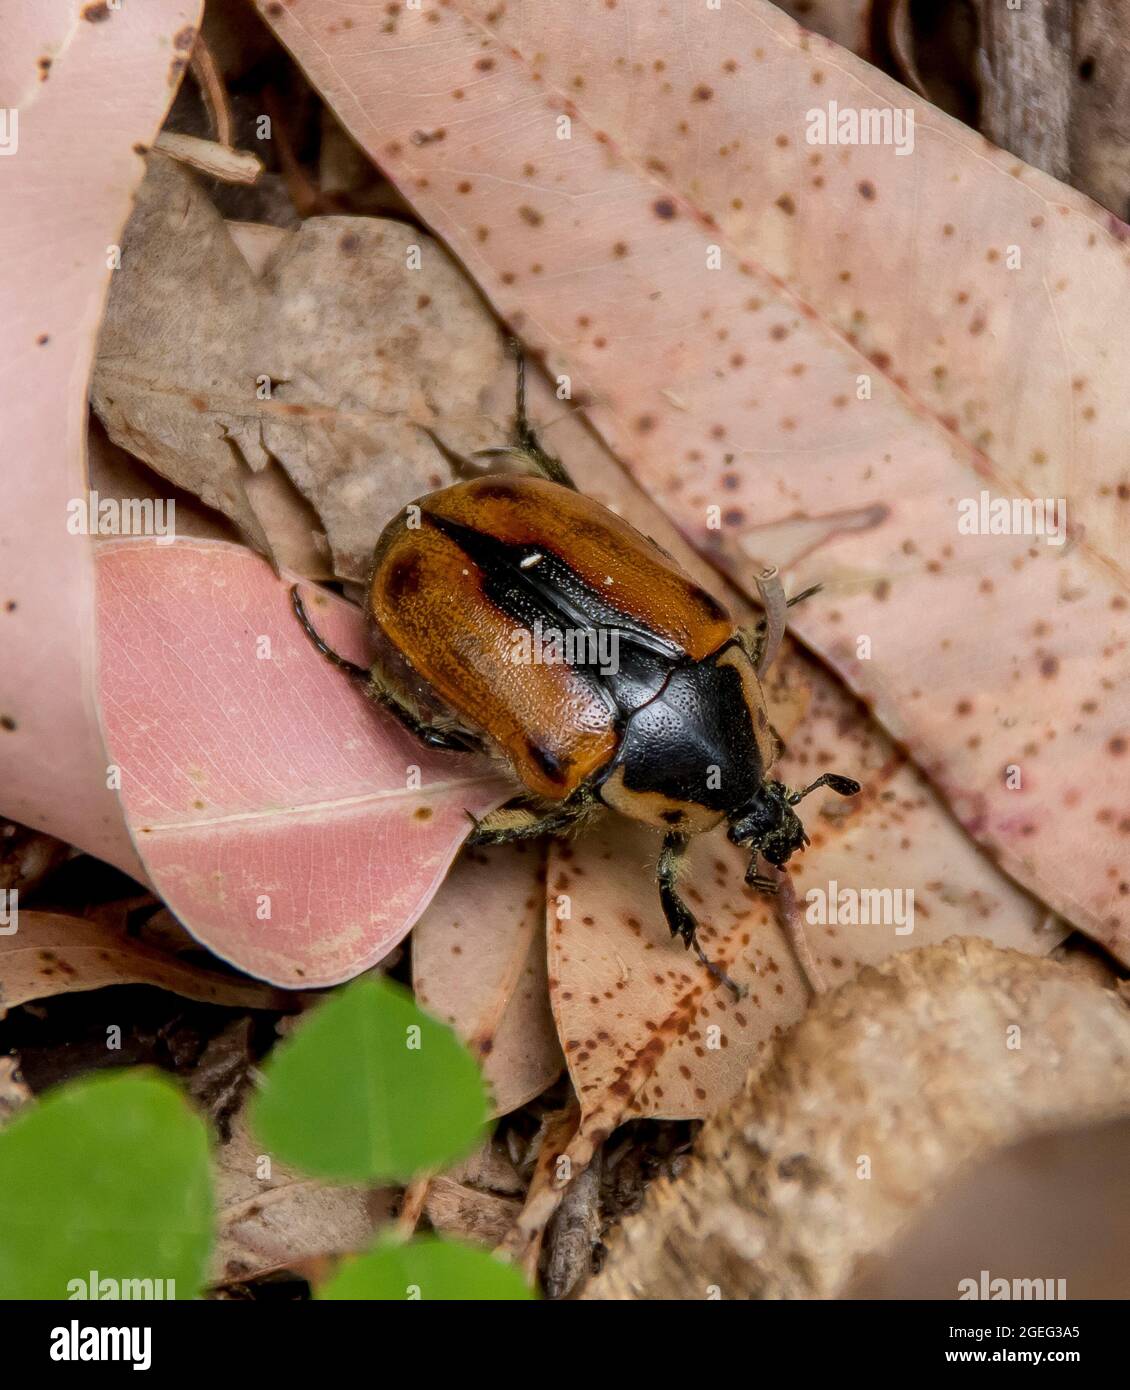 Cowboy Beetle - Chondropyga dorsalis (Diaphonia dorsalis) crawling amongst leaf litter on subtropical rainforest floor. Queensland, Australia. Stock Photo